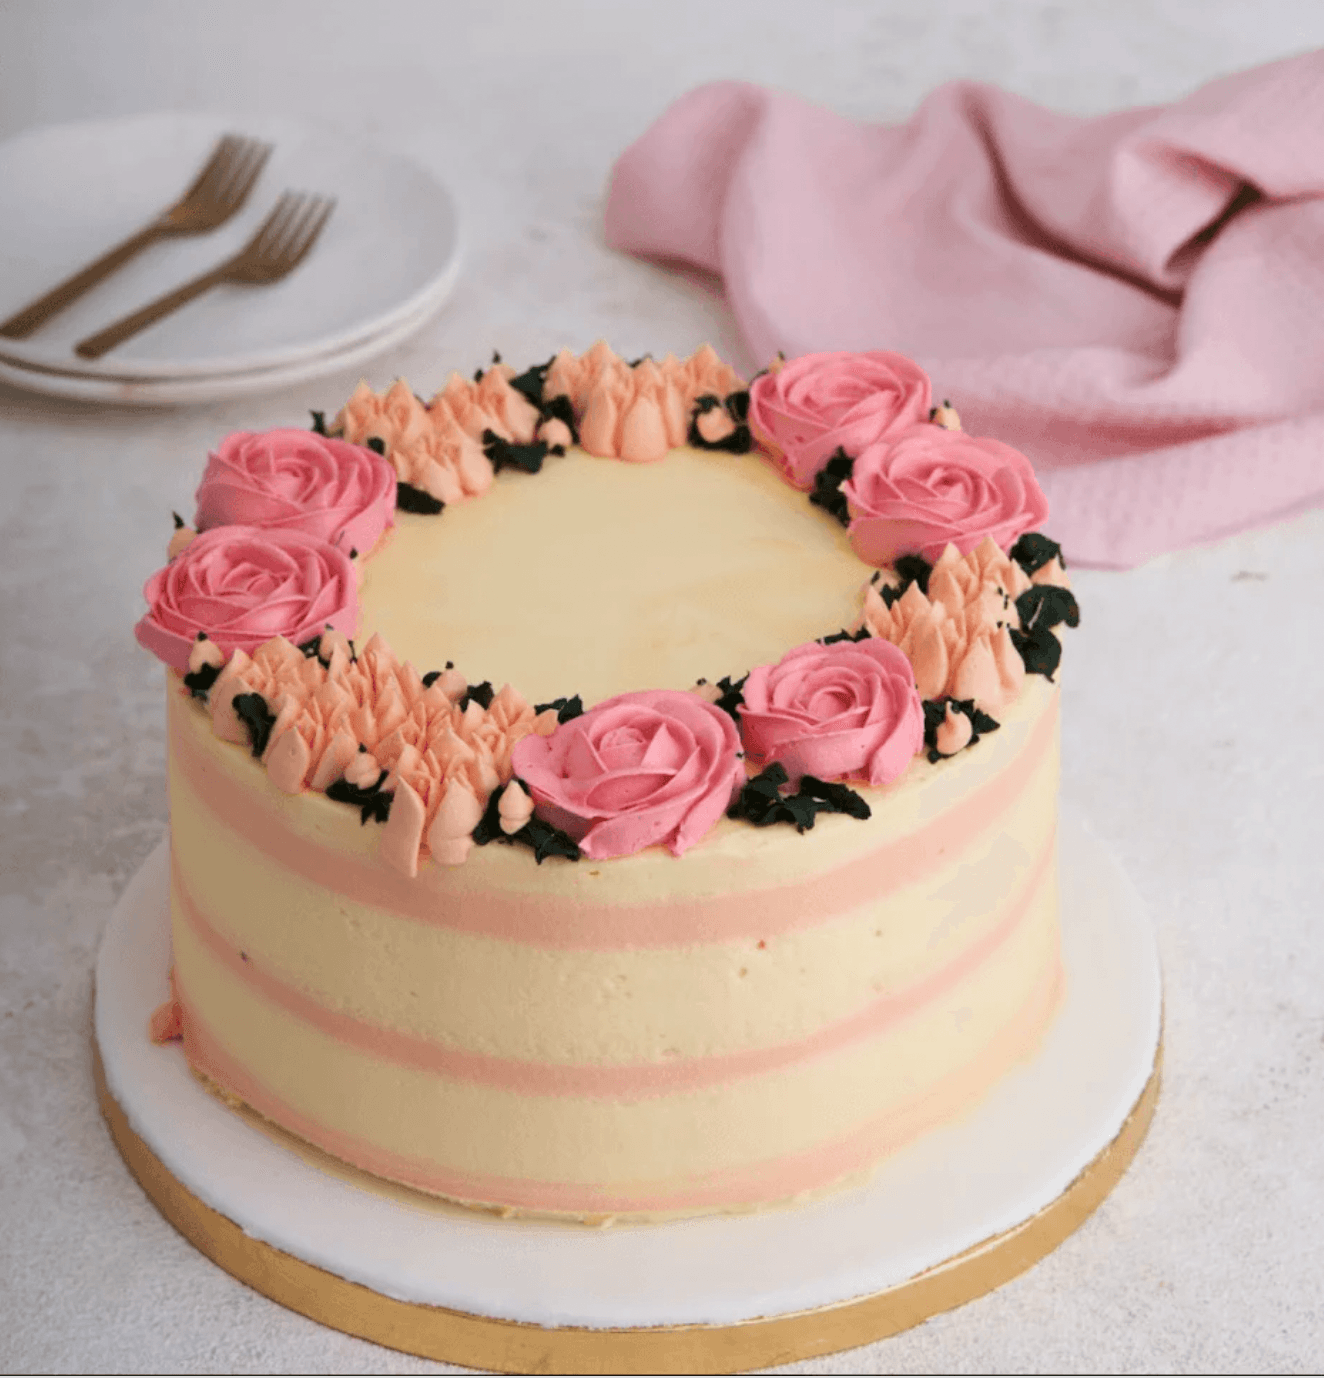 Amazon.com: Wilton Dancing Daisy Cake Pan: Novelty Cake Pans: Home & Kitchen